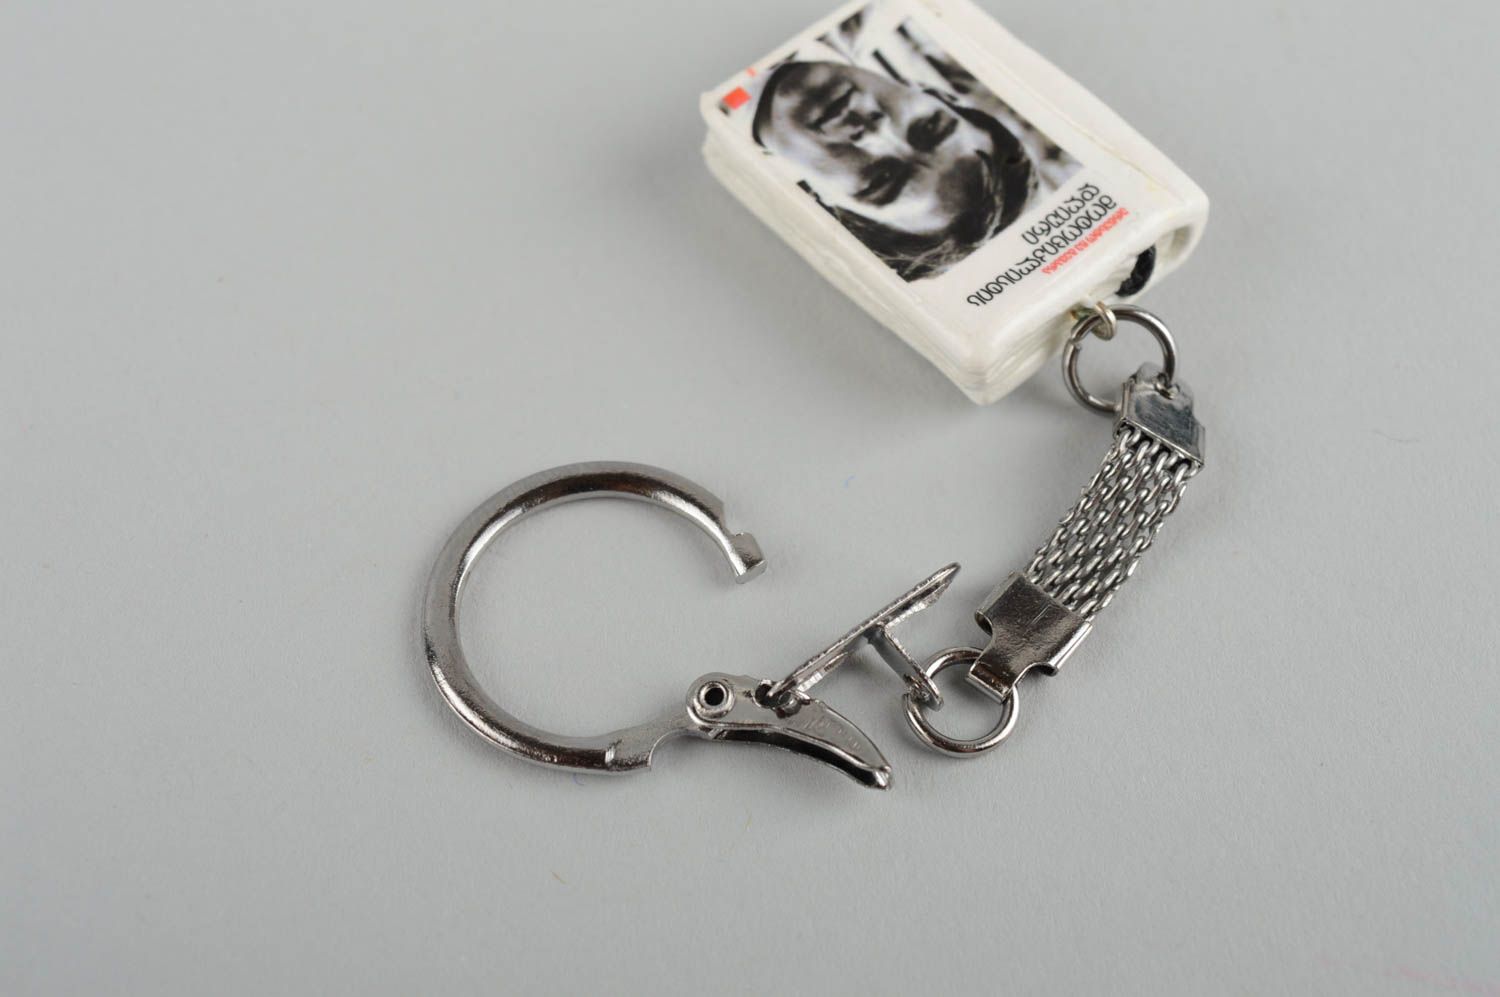 Handmade keychain designer keyrings handbag charm souvenir ideas cool gifts photo 5